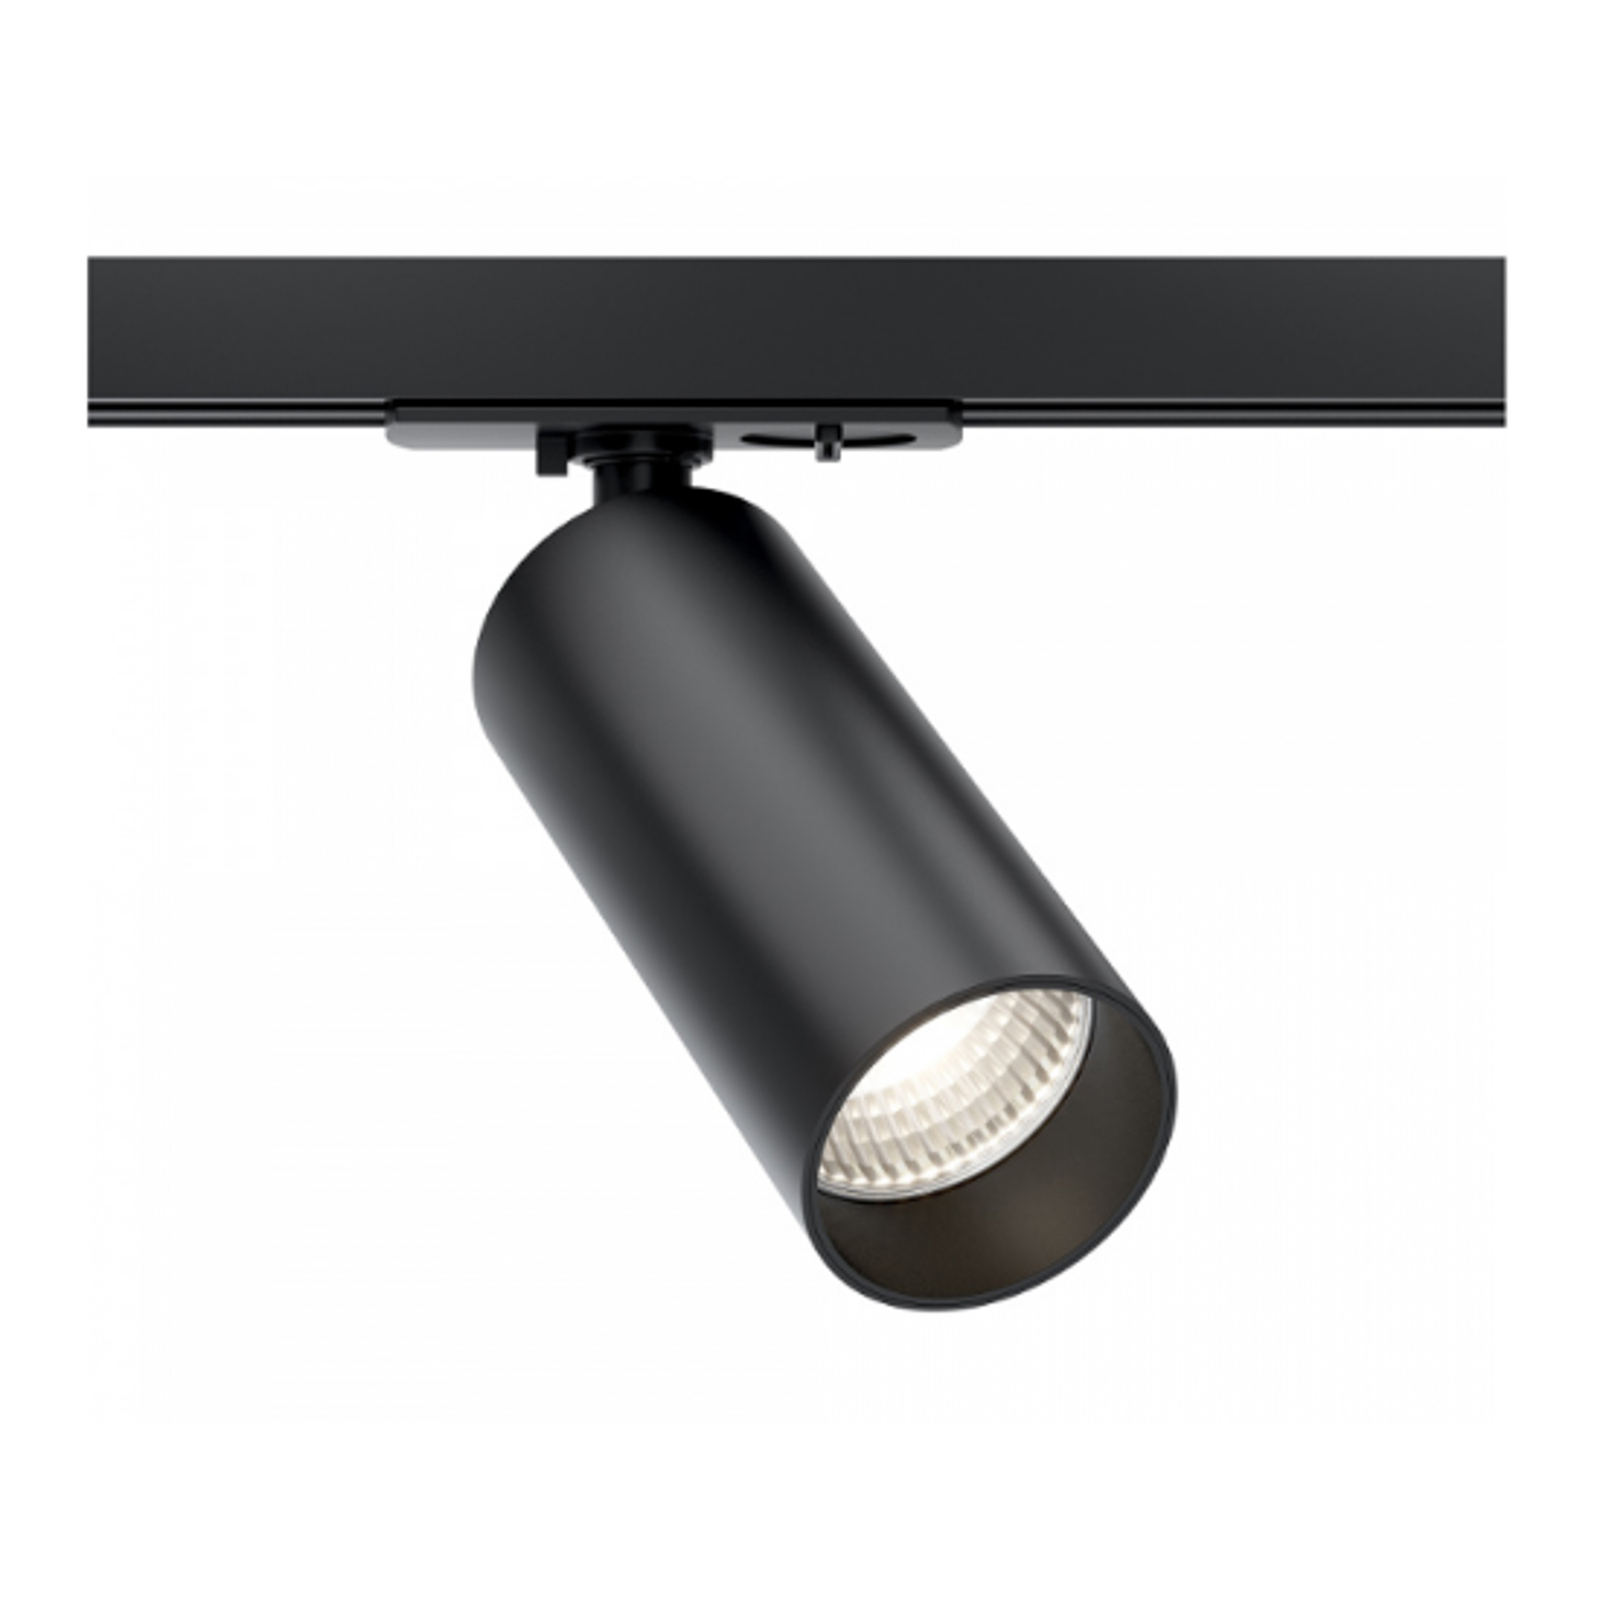 Maytoni Focus LED-Spot, Unity-System, Triac, 930, schwarz